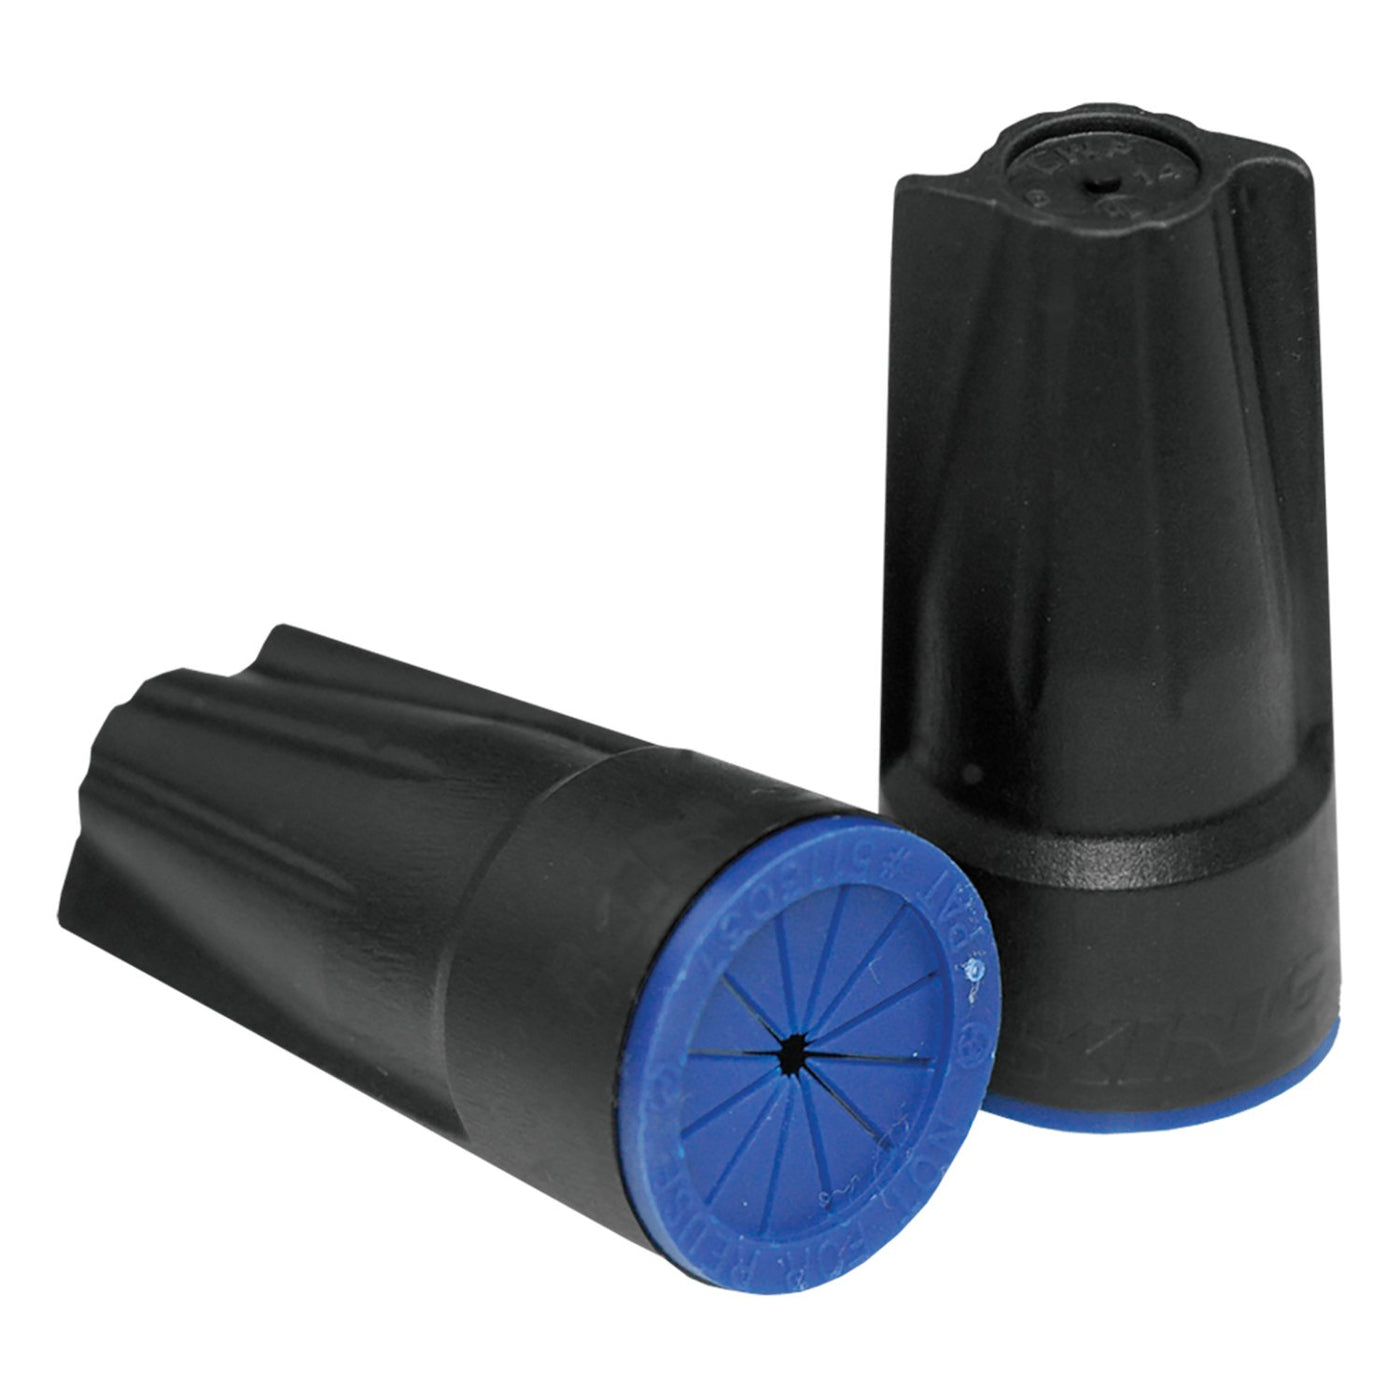 King Innovation 61345 Dryconn Waterproof Connectors, Black/Blue; 50/Bag